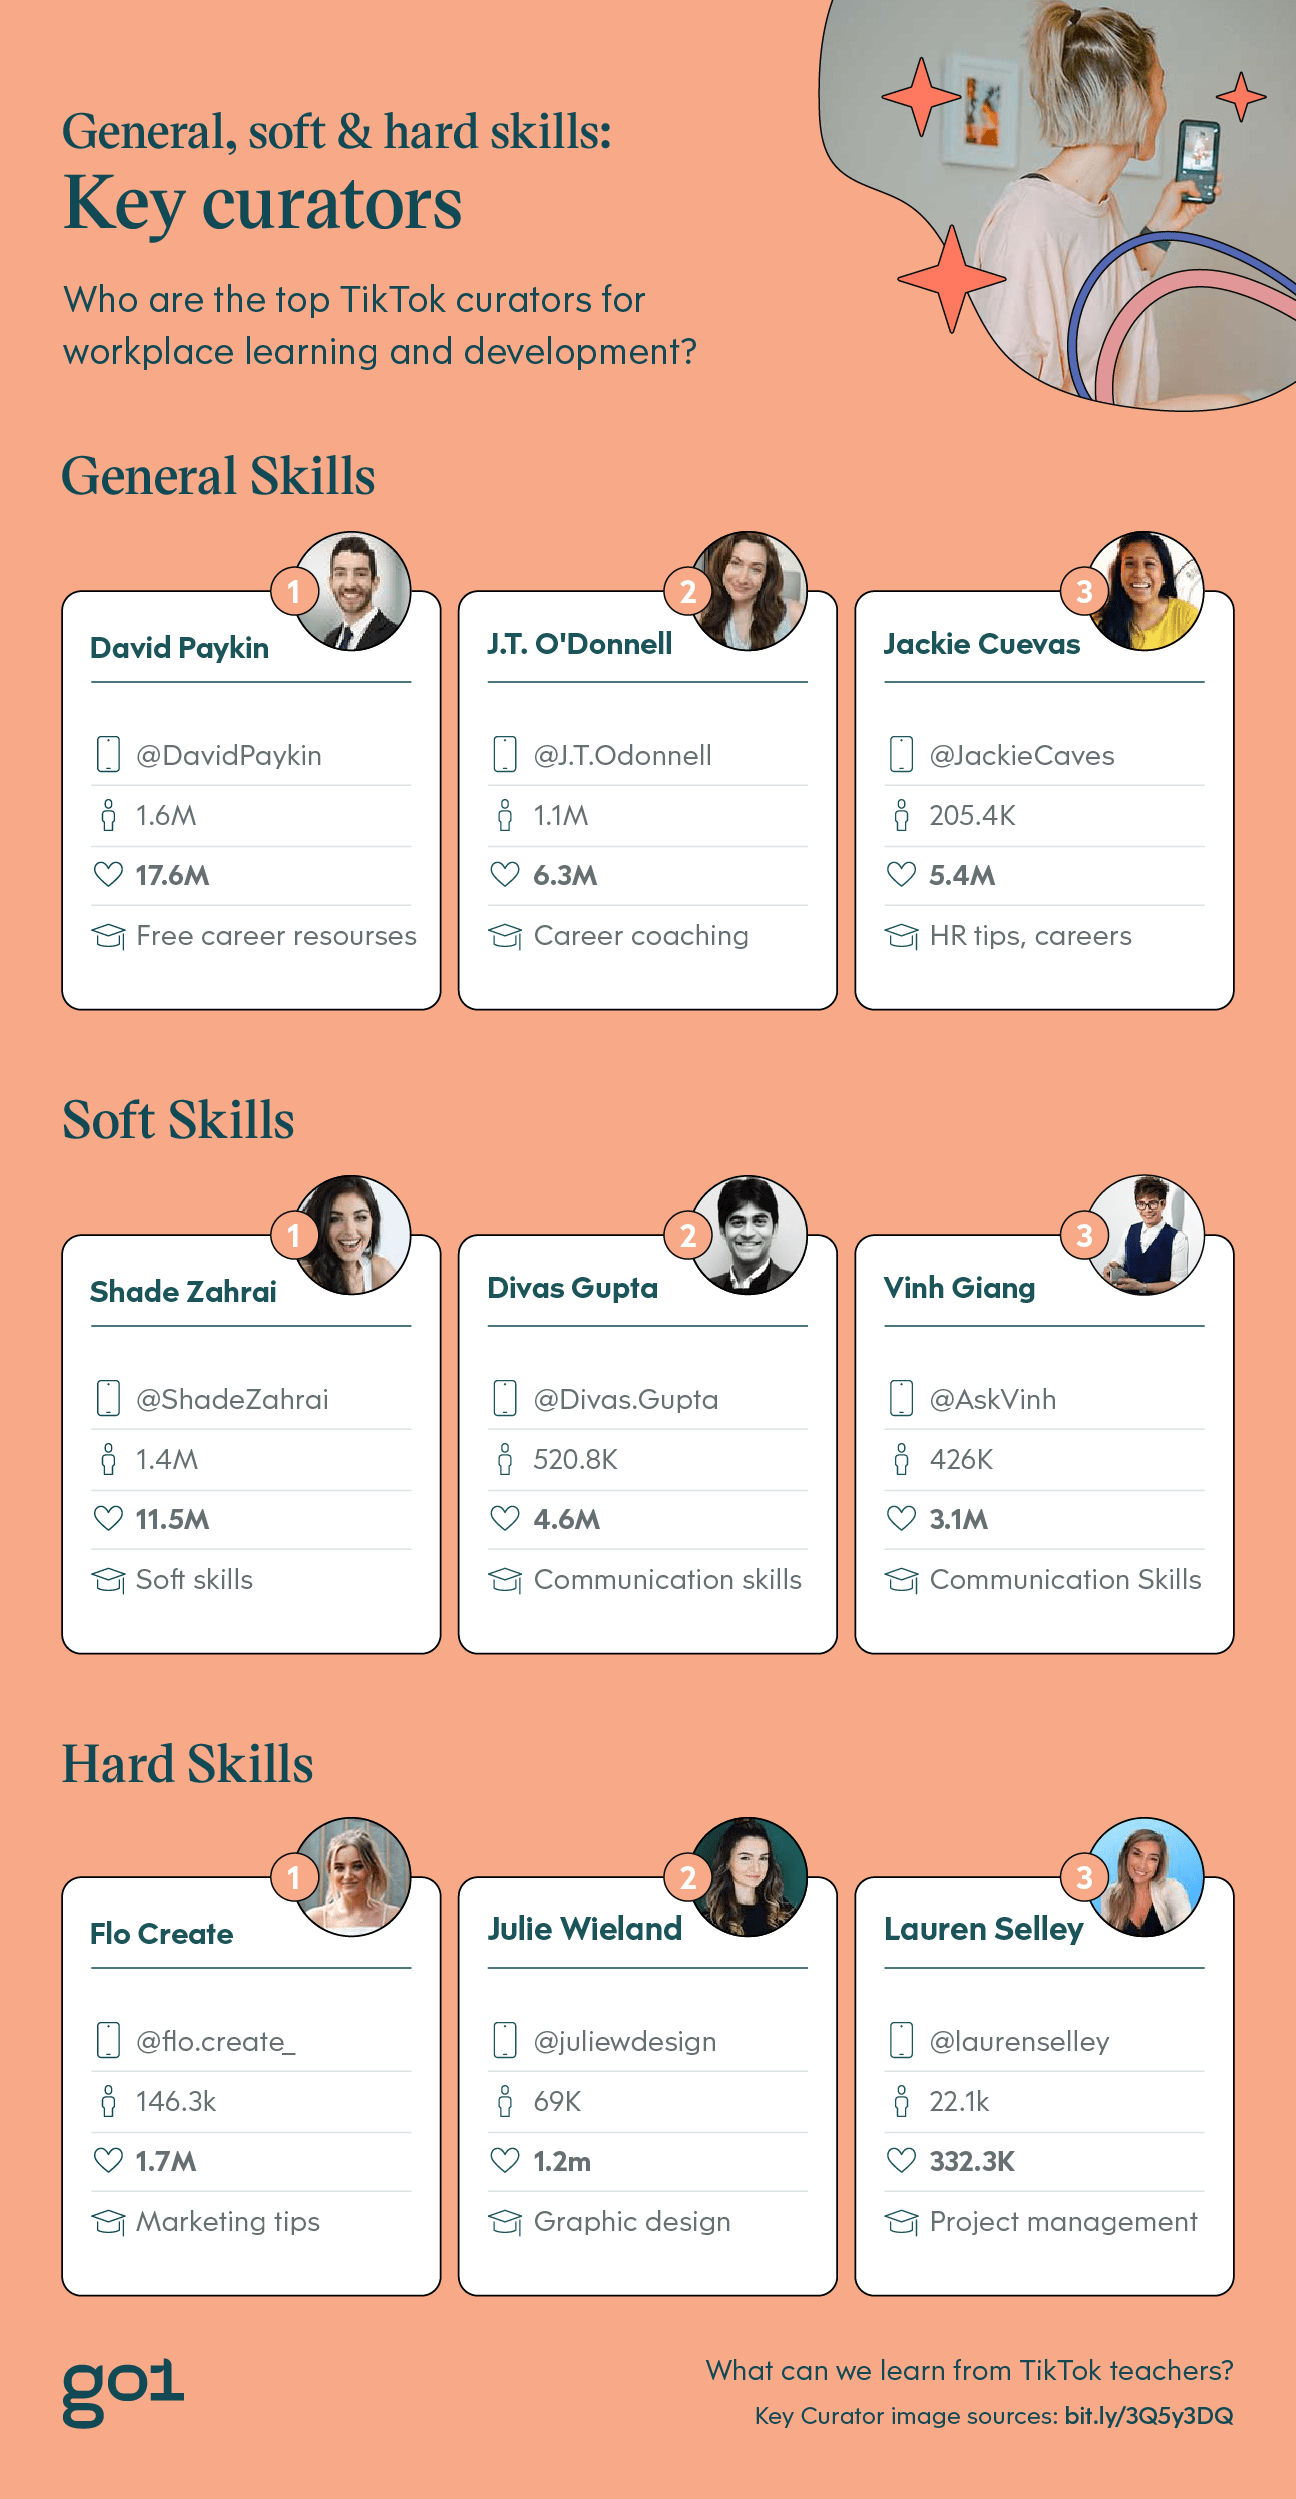 An image displaying key TikTok curators for general skills, hard skills, and soft skills.